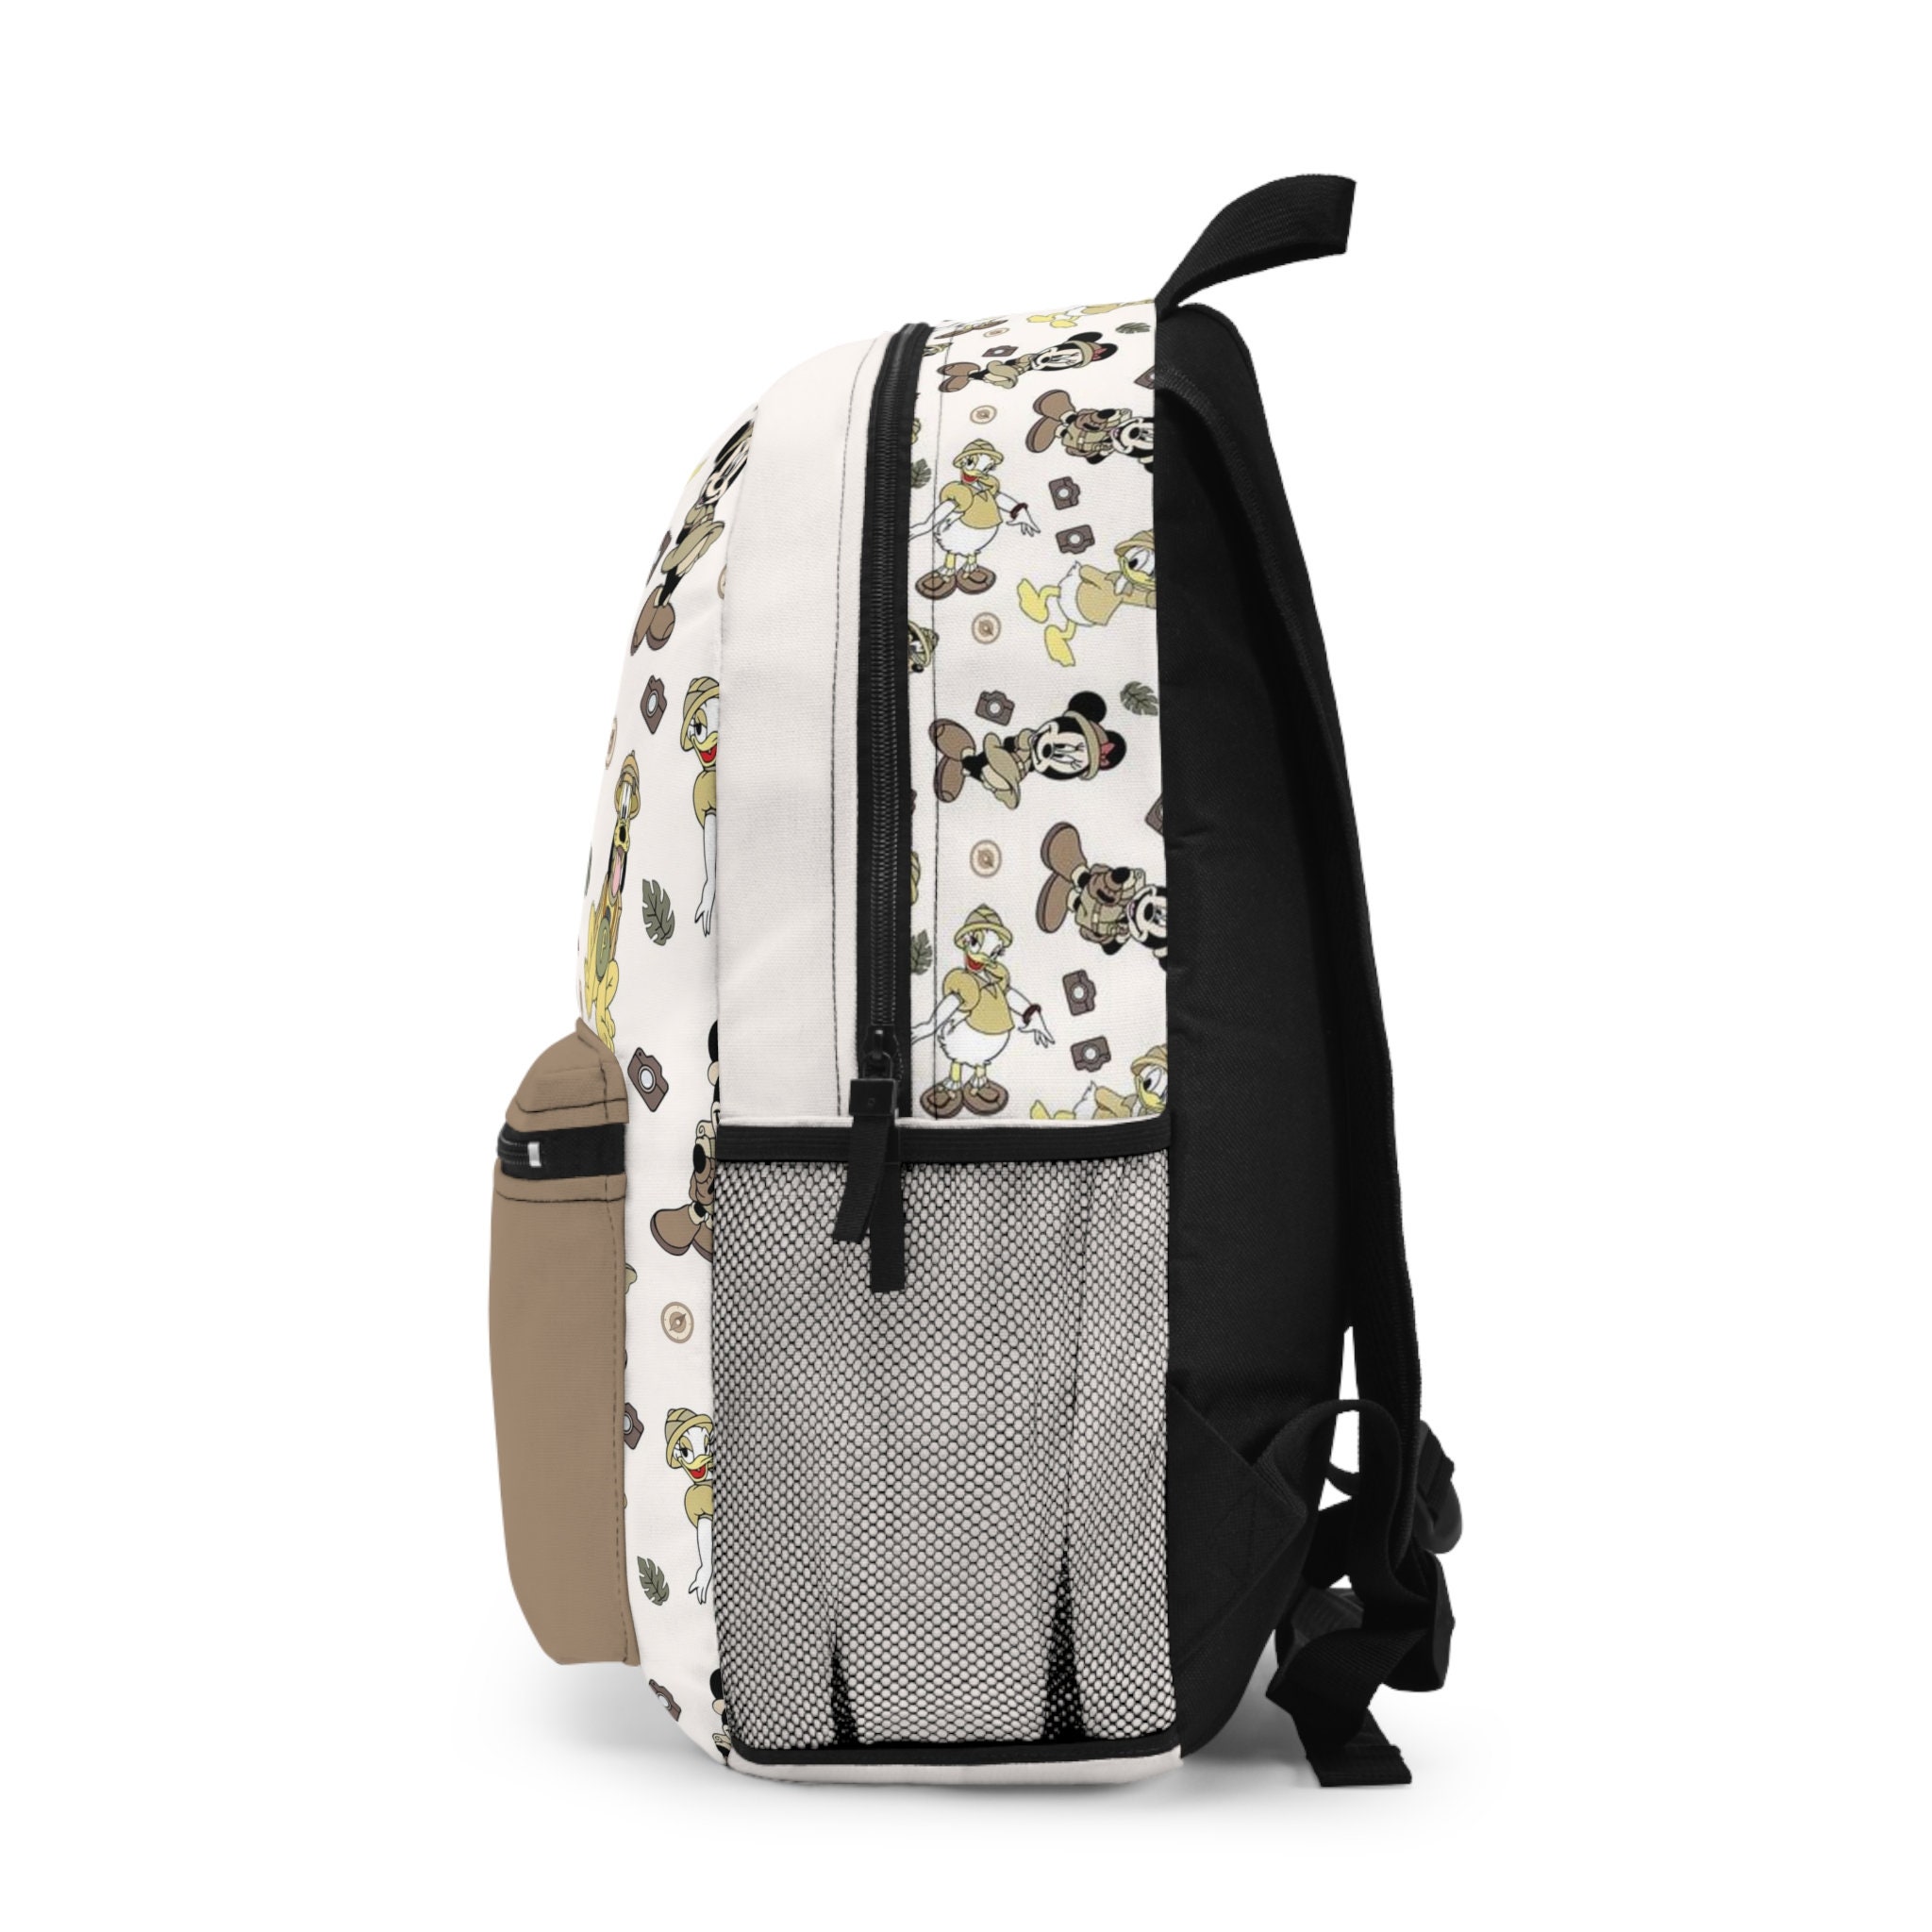 Animal Kingdom Disney Trip Custom Name Personalized Gift School Backpack